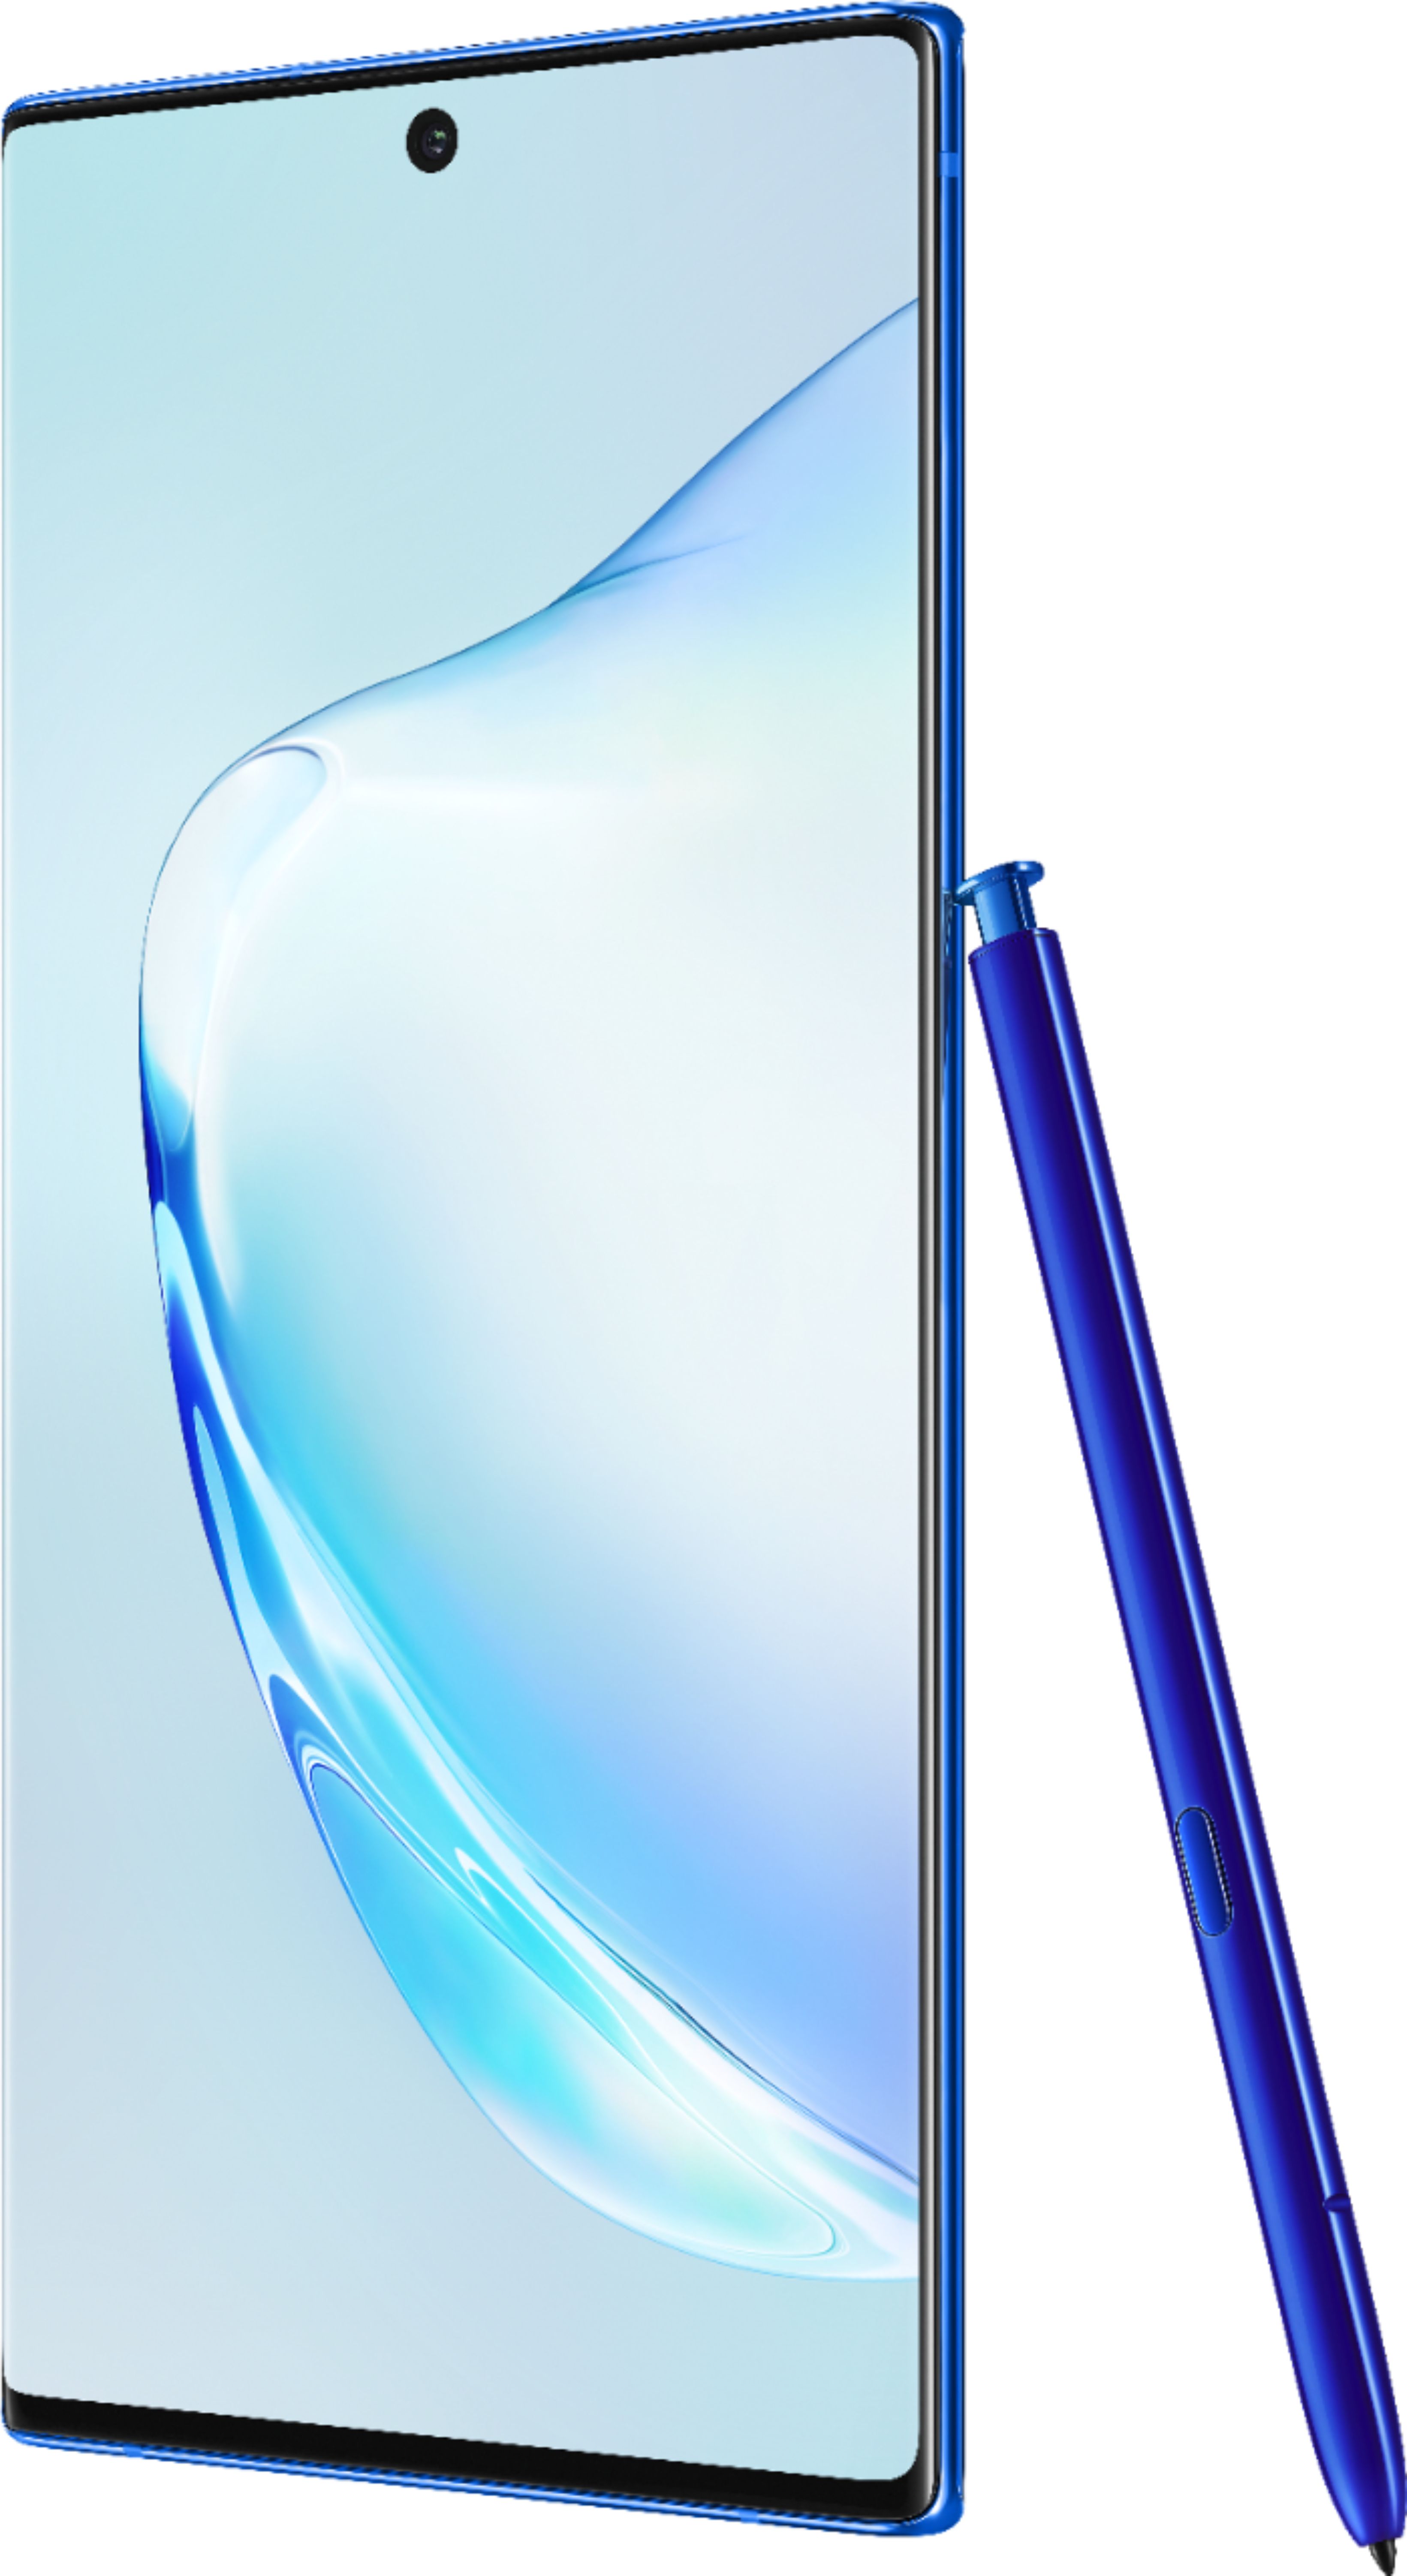 Samsung Galaxy Note10+ 256GB Aura Blue (Verizon) SMN975UZBV - Best Buy